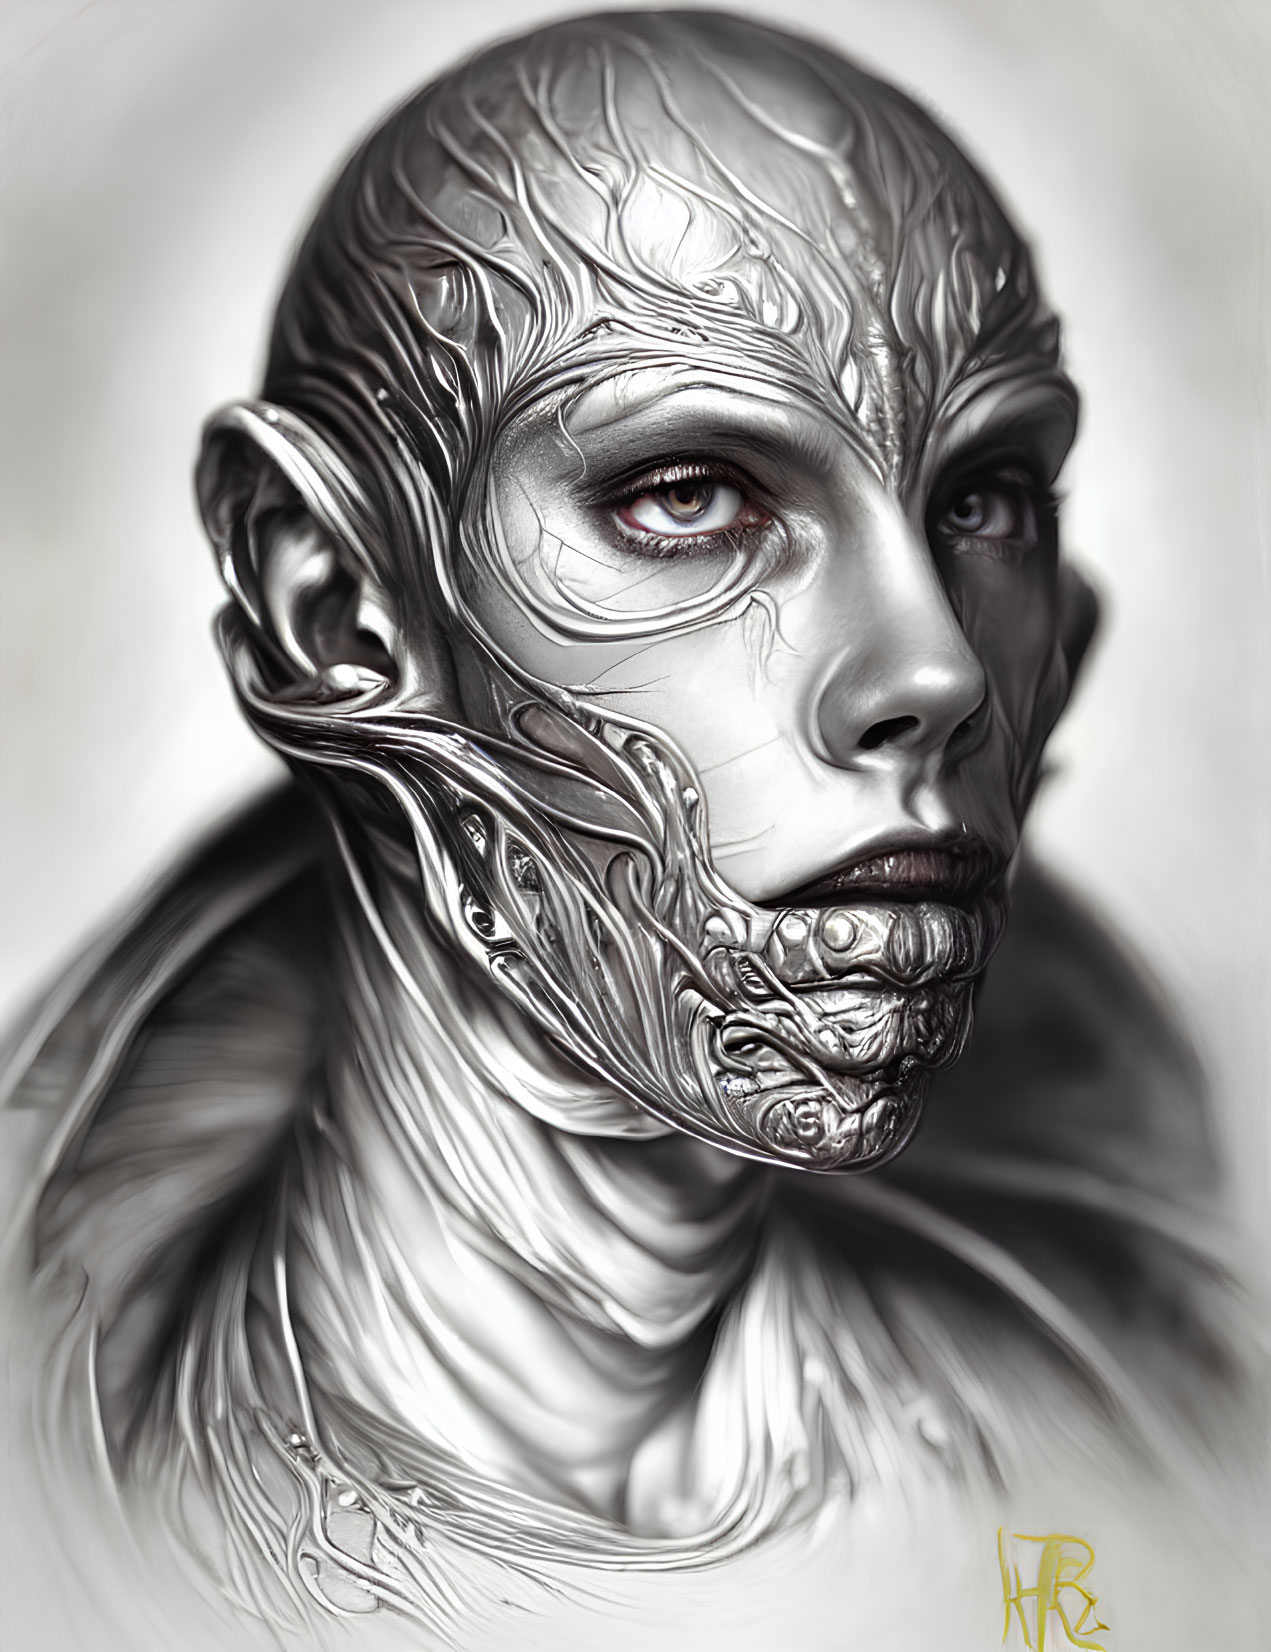 Monochromatic digital artwork of metallic humanoid with intricate designs